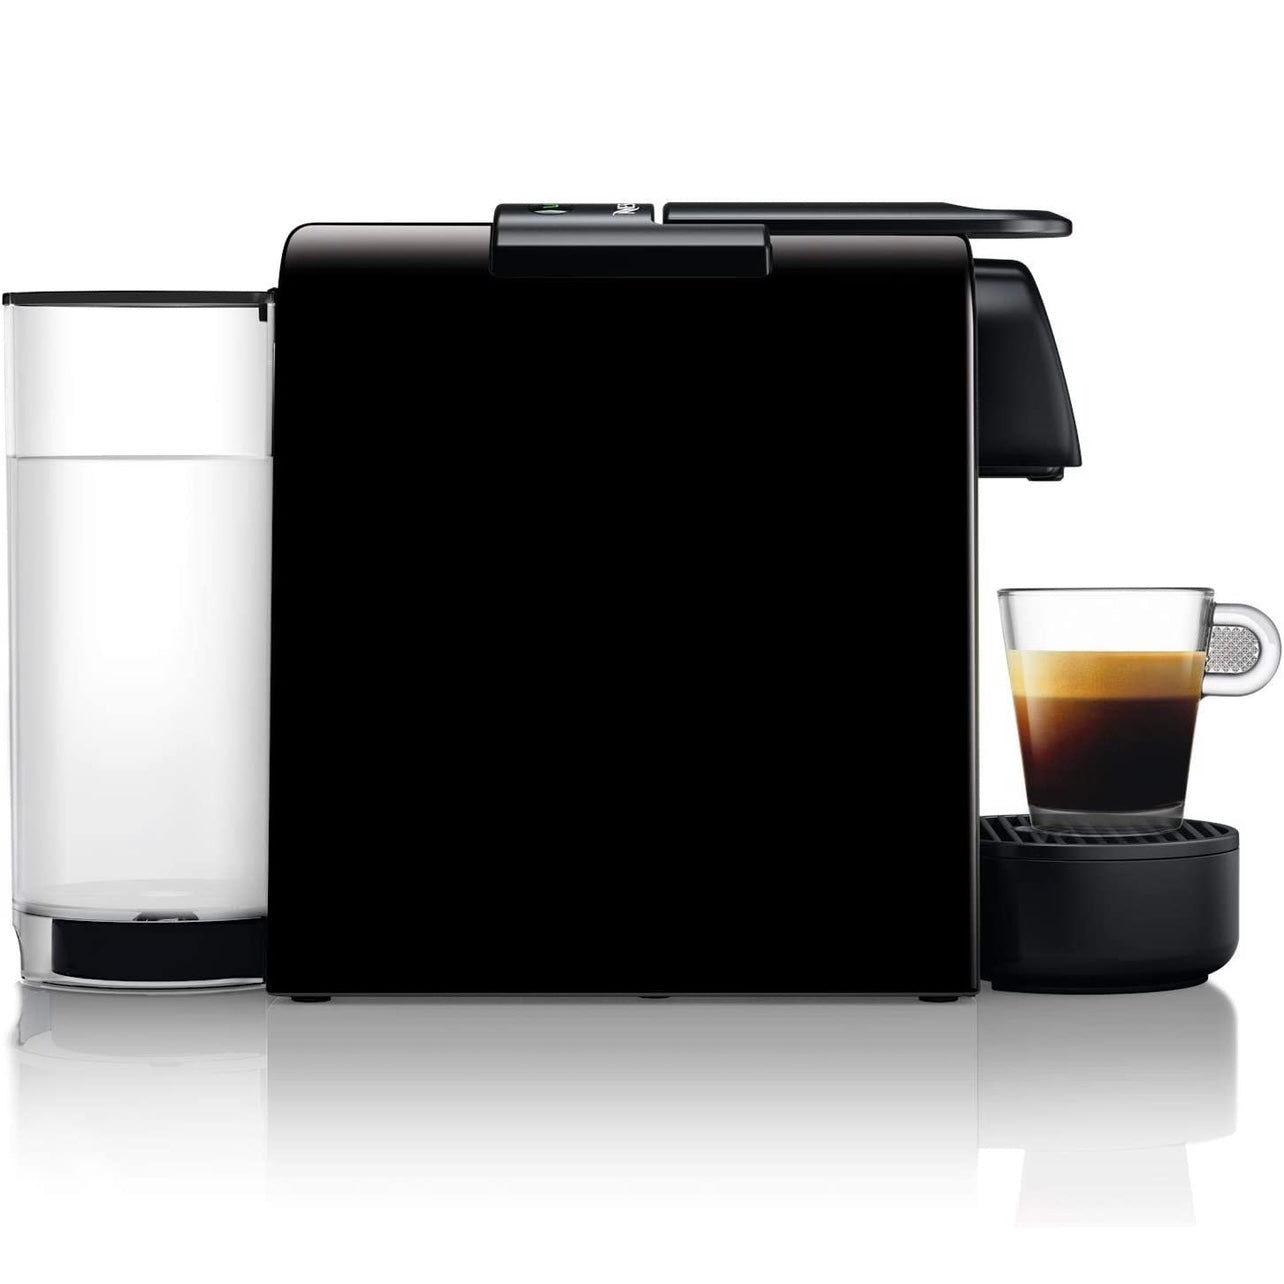 Nespresso-machine-café-essenza-mini-aeroccino3-de'longhi-coffee-maker-2